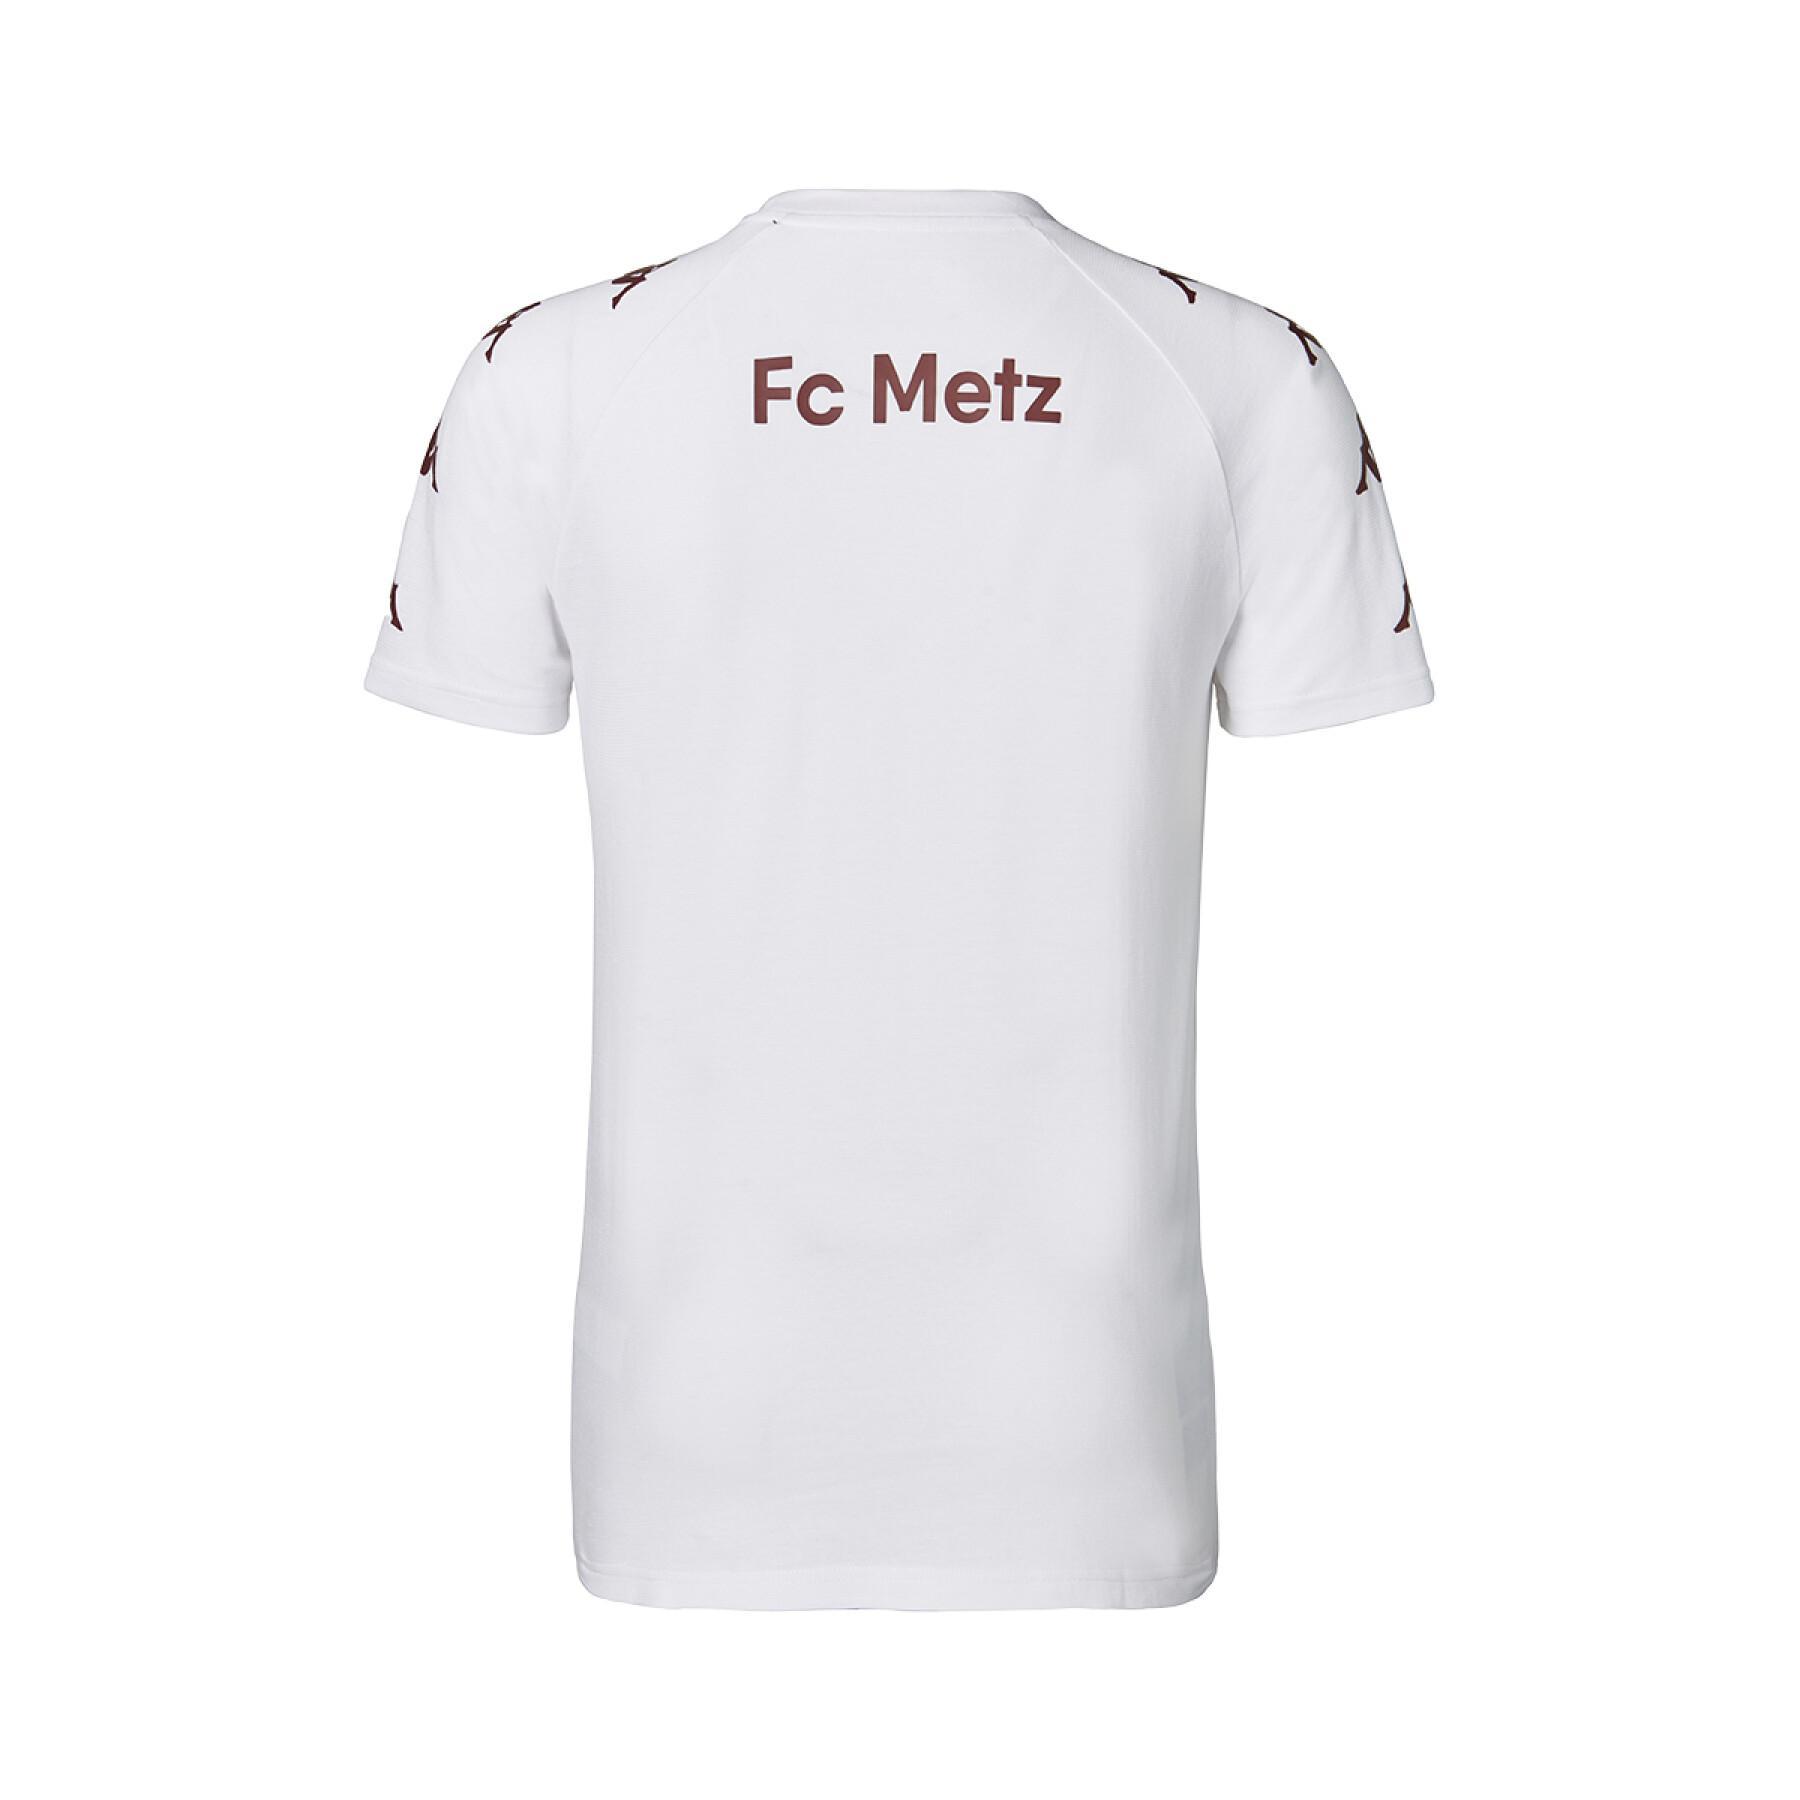 T-shirt FC Metz 2021/22 ancone